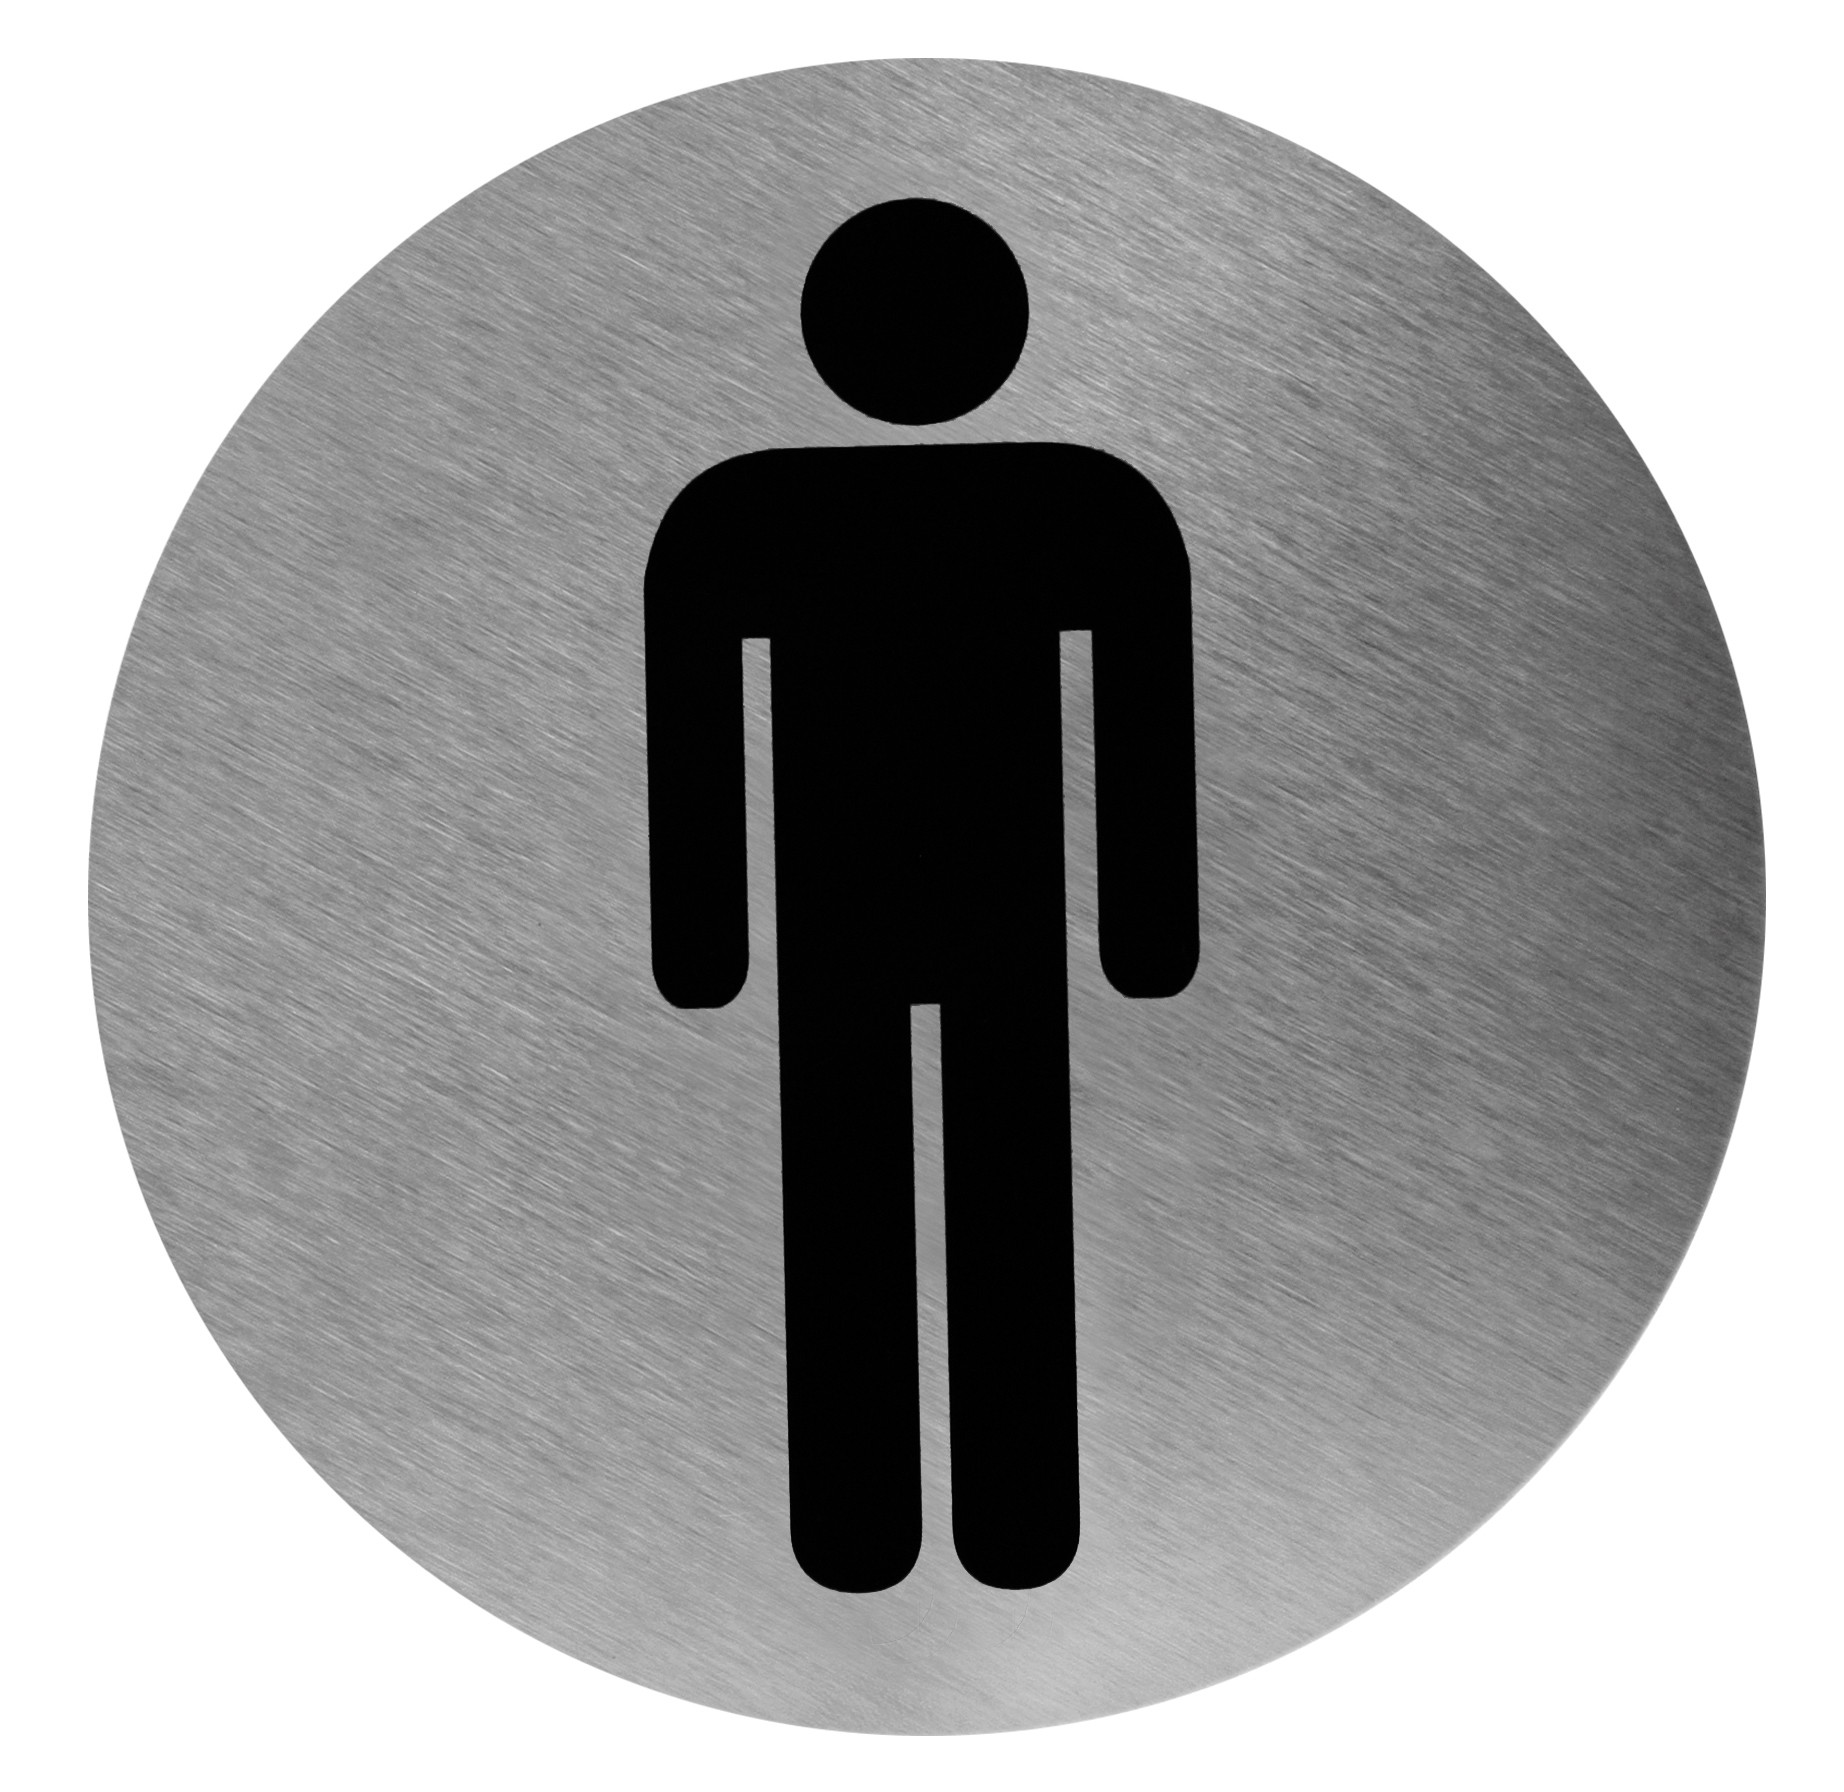 Качка туалет. Туалет мужской. Значок туалета. Мужской туалет табличка. Знак «люди».